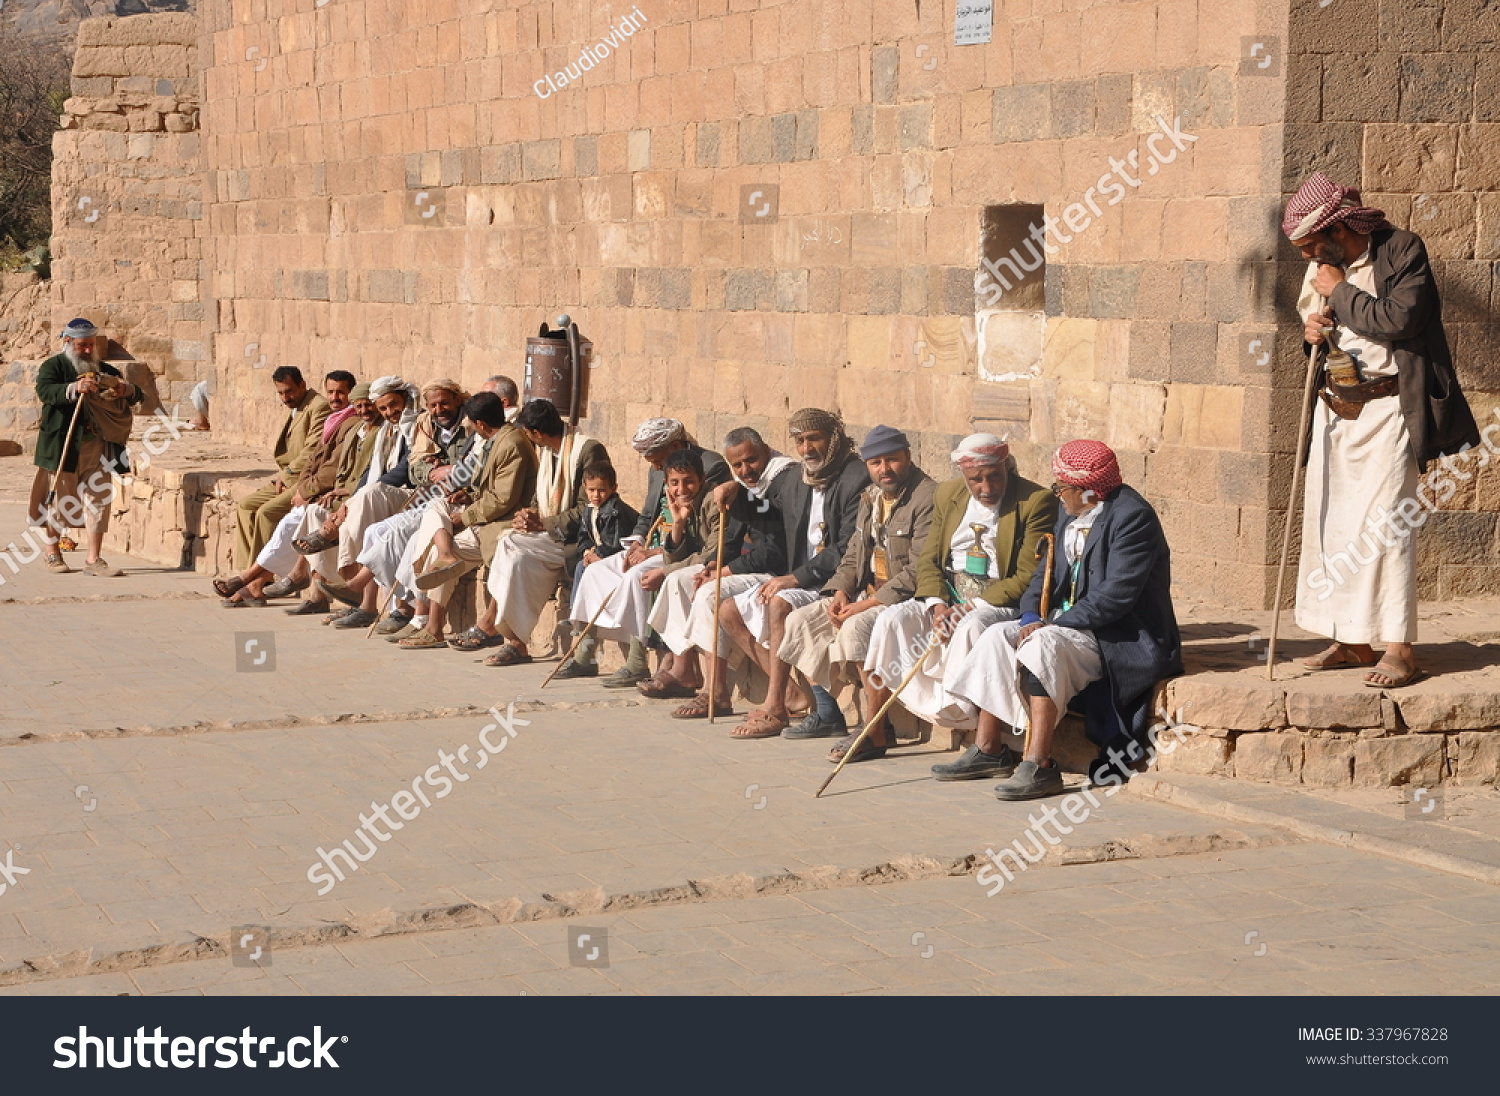 Thula, Yemen - Dec 29: Men sit on the main square of Thula on December, 29, 2009. Thula, Yemen #337967828